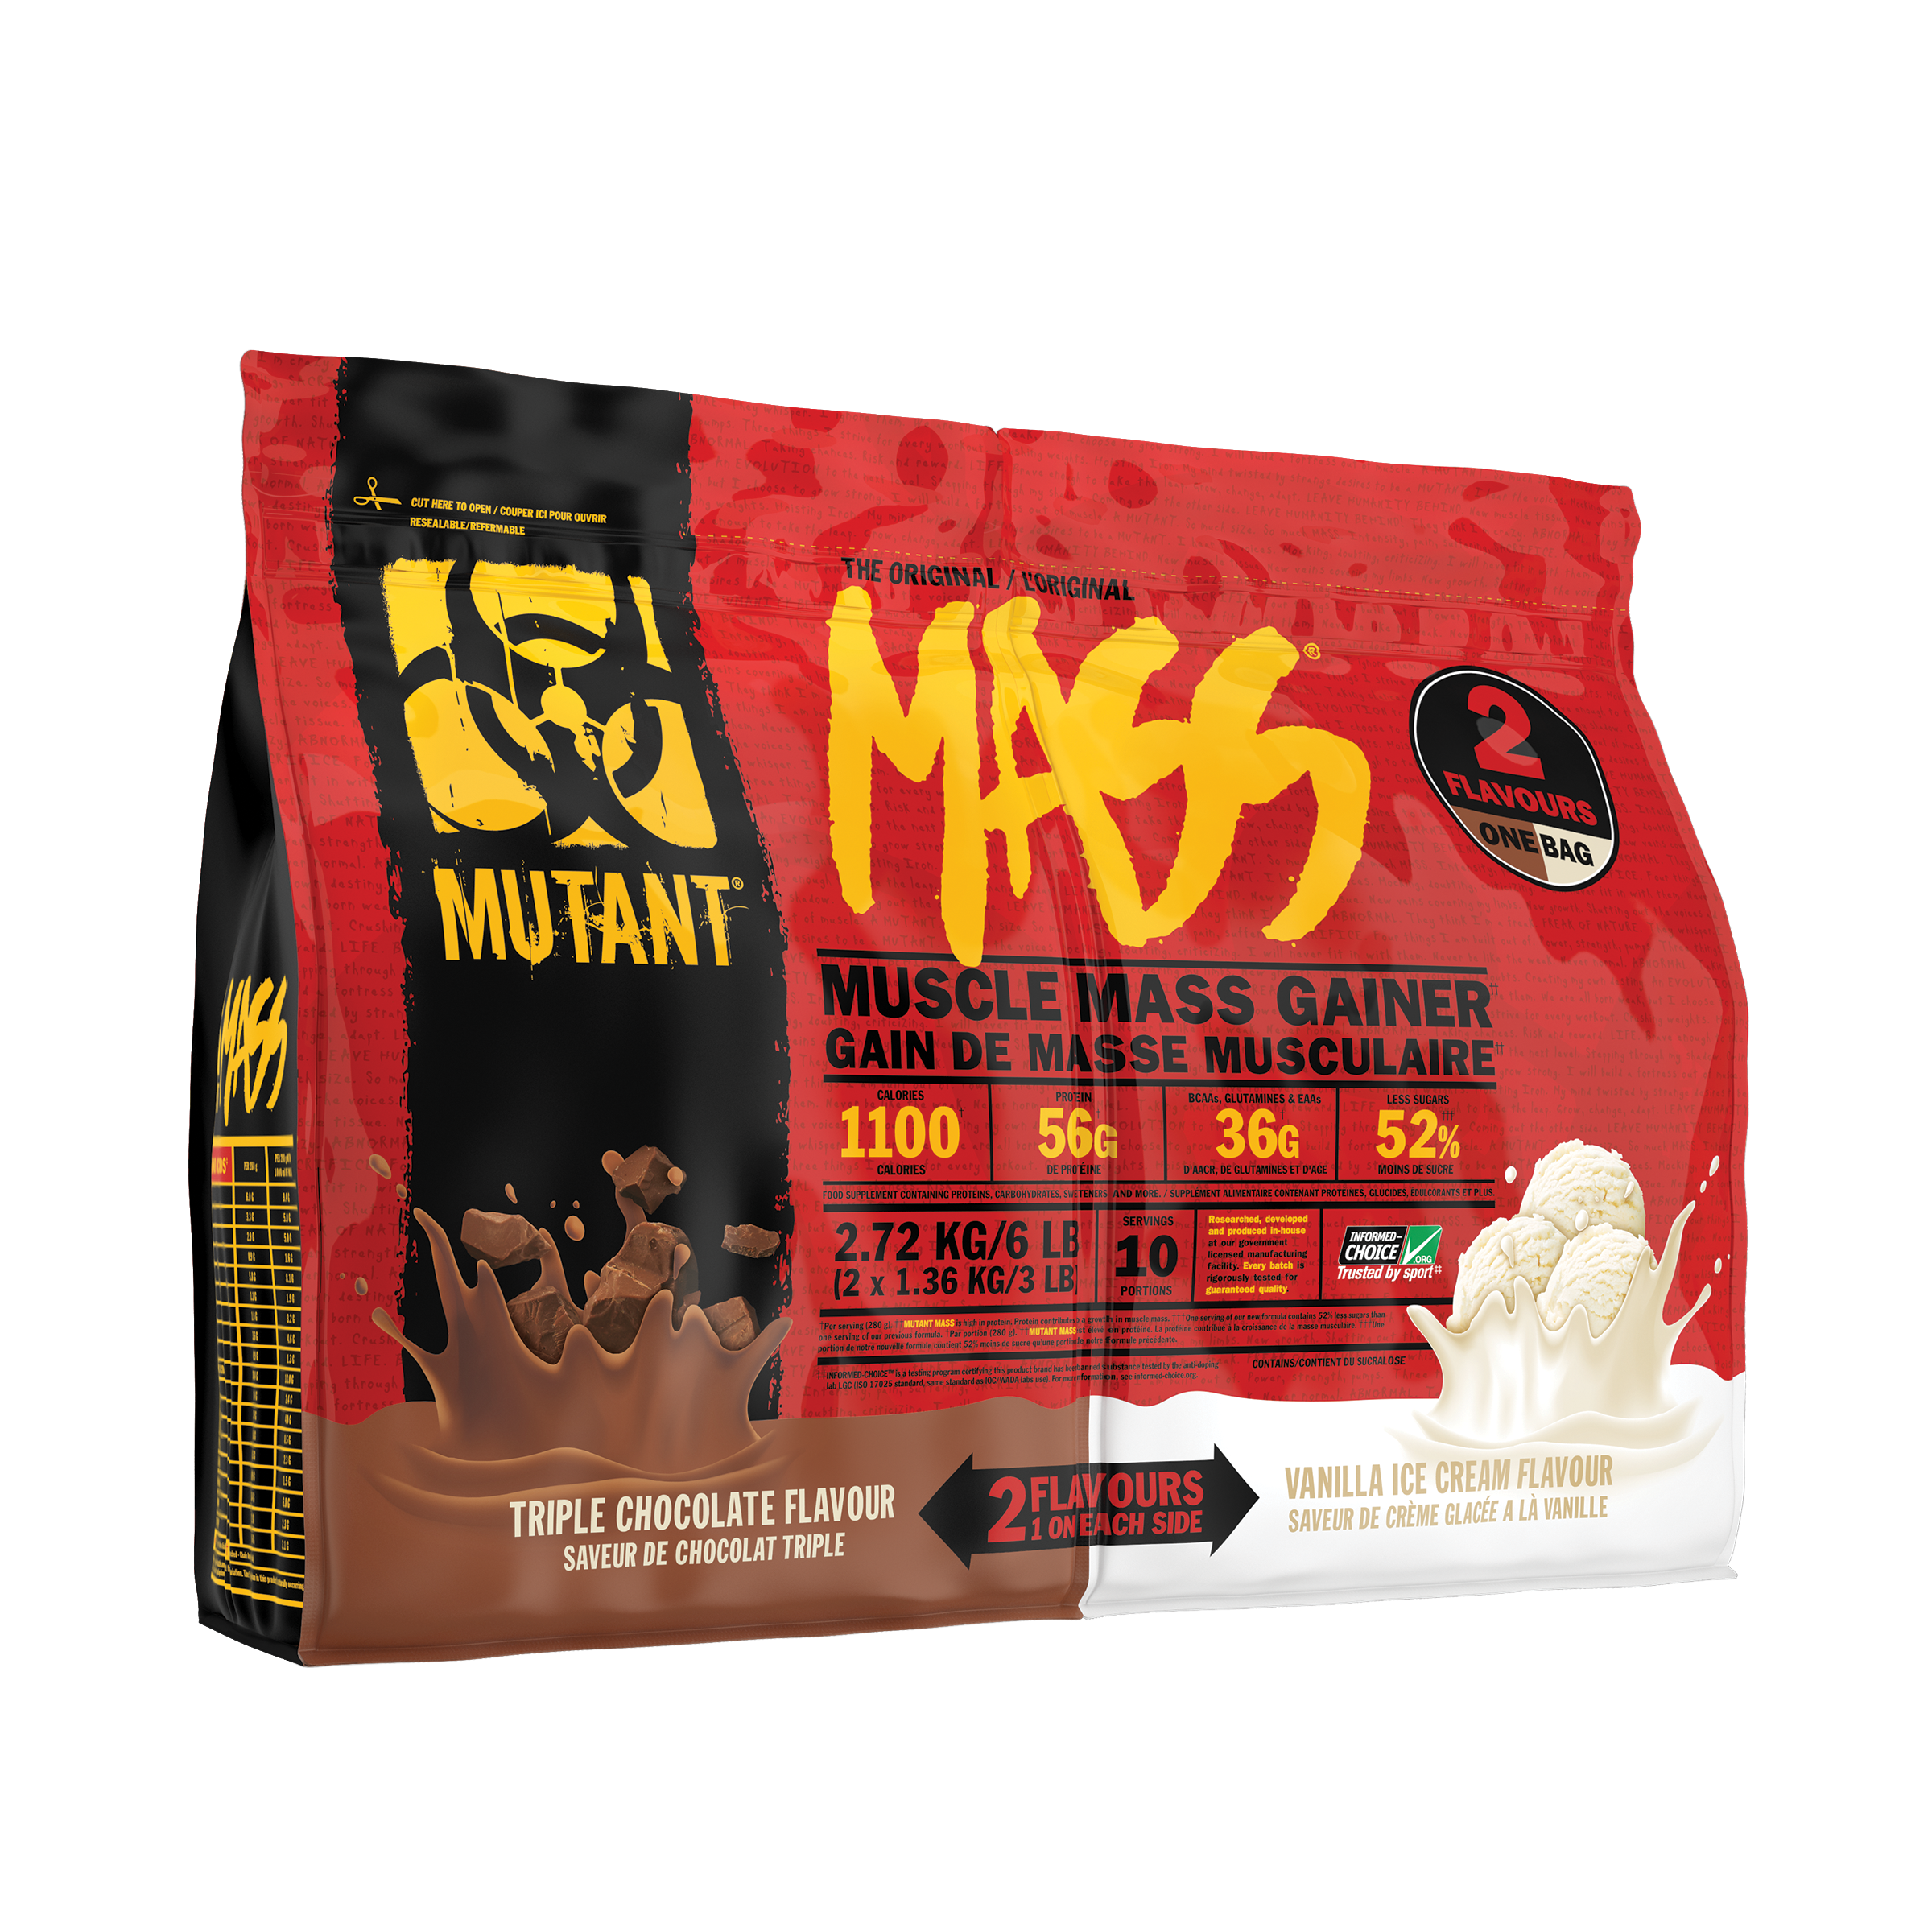 Mutant MASS Dual Chamber - 2 FLAVOURS in 1 BAG (6lbs) Mass Gainers Triple Chocolate & Vanilla Ice Cream Mutant